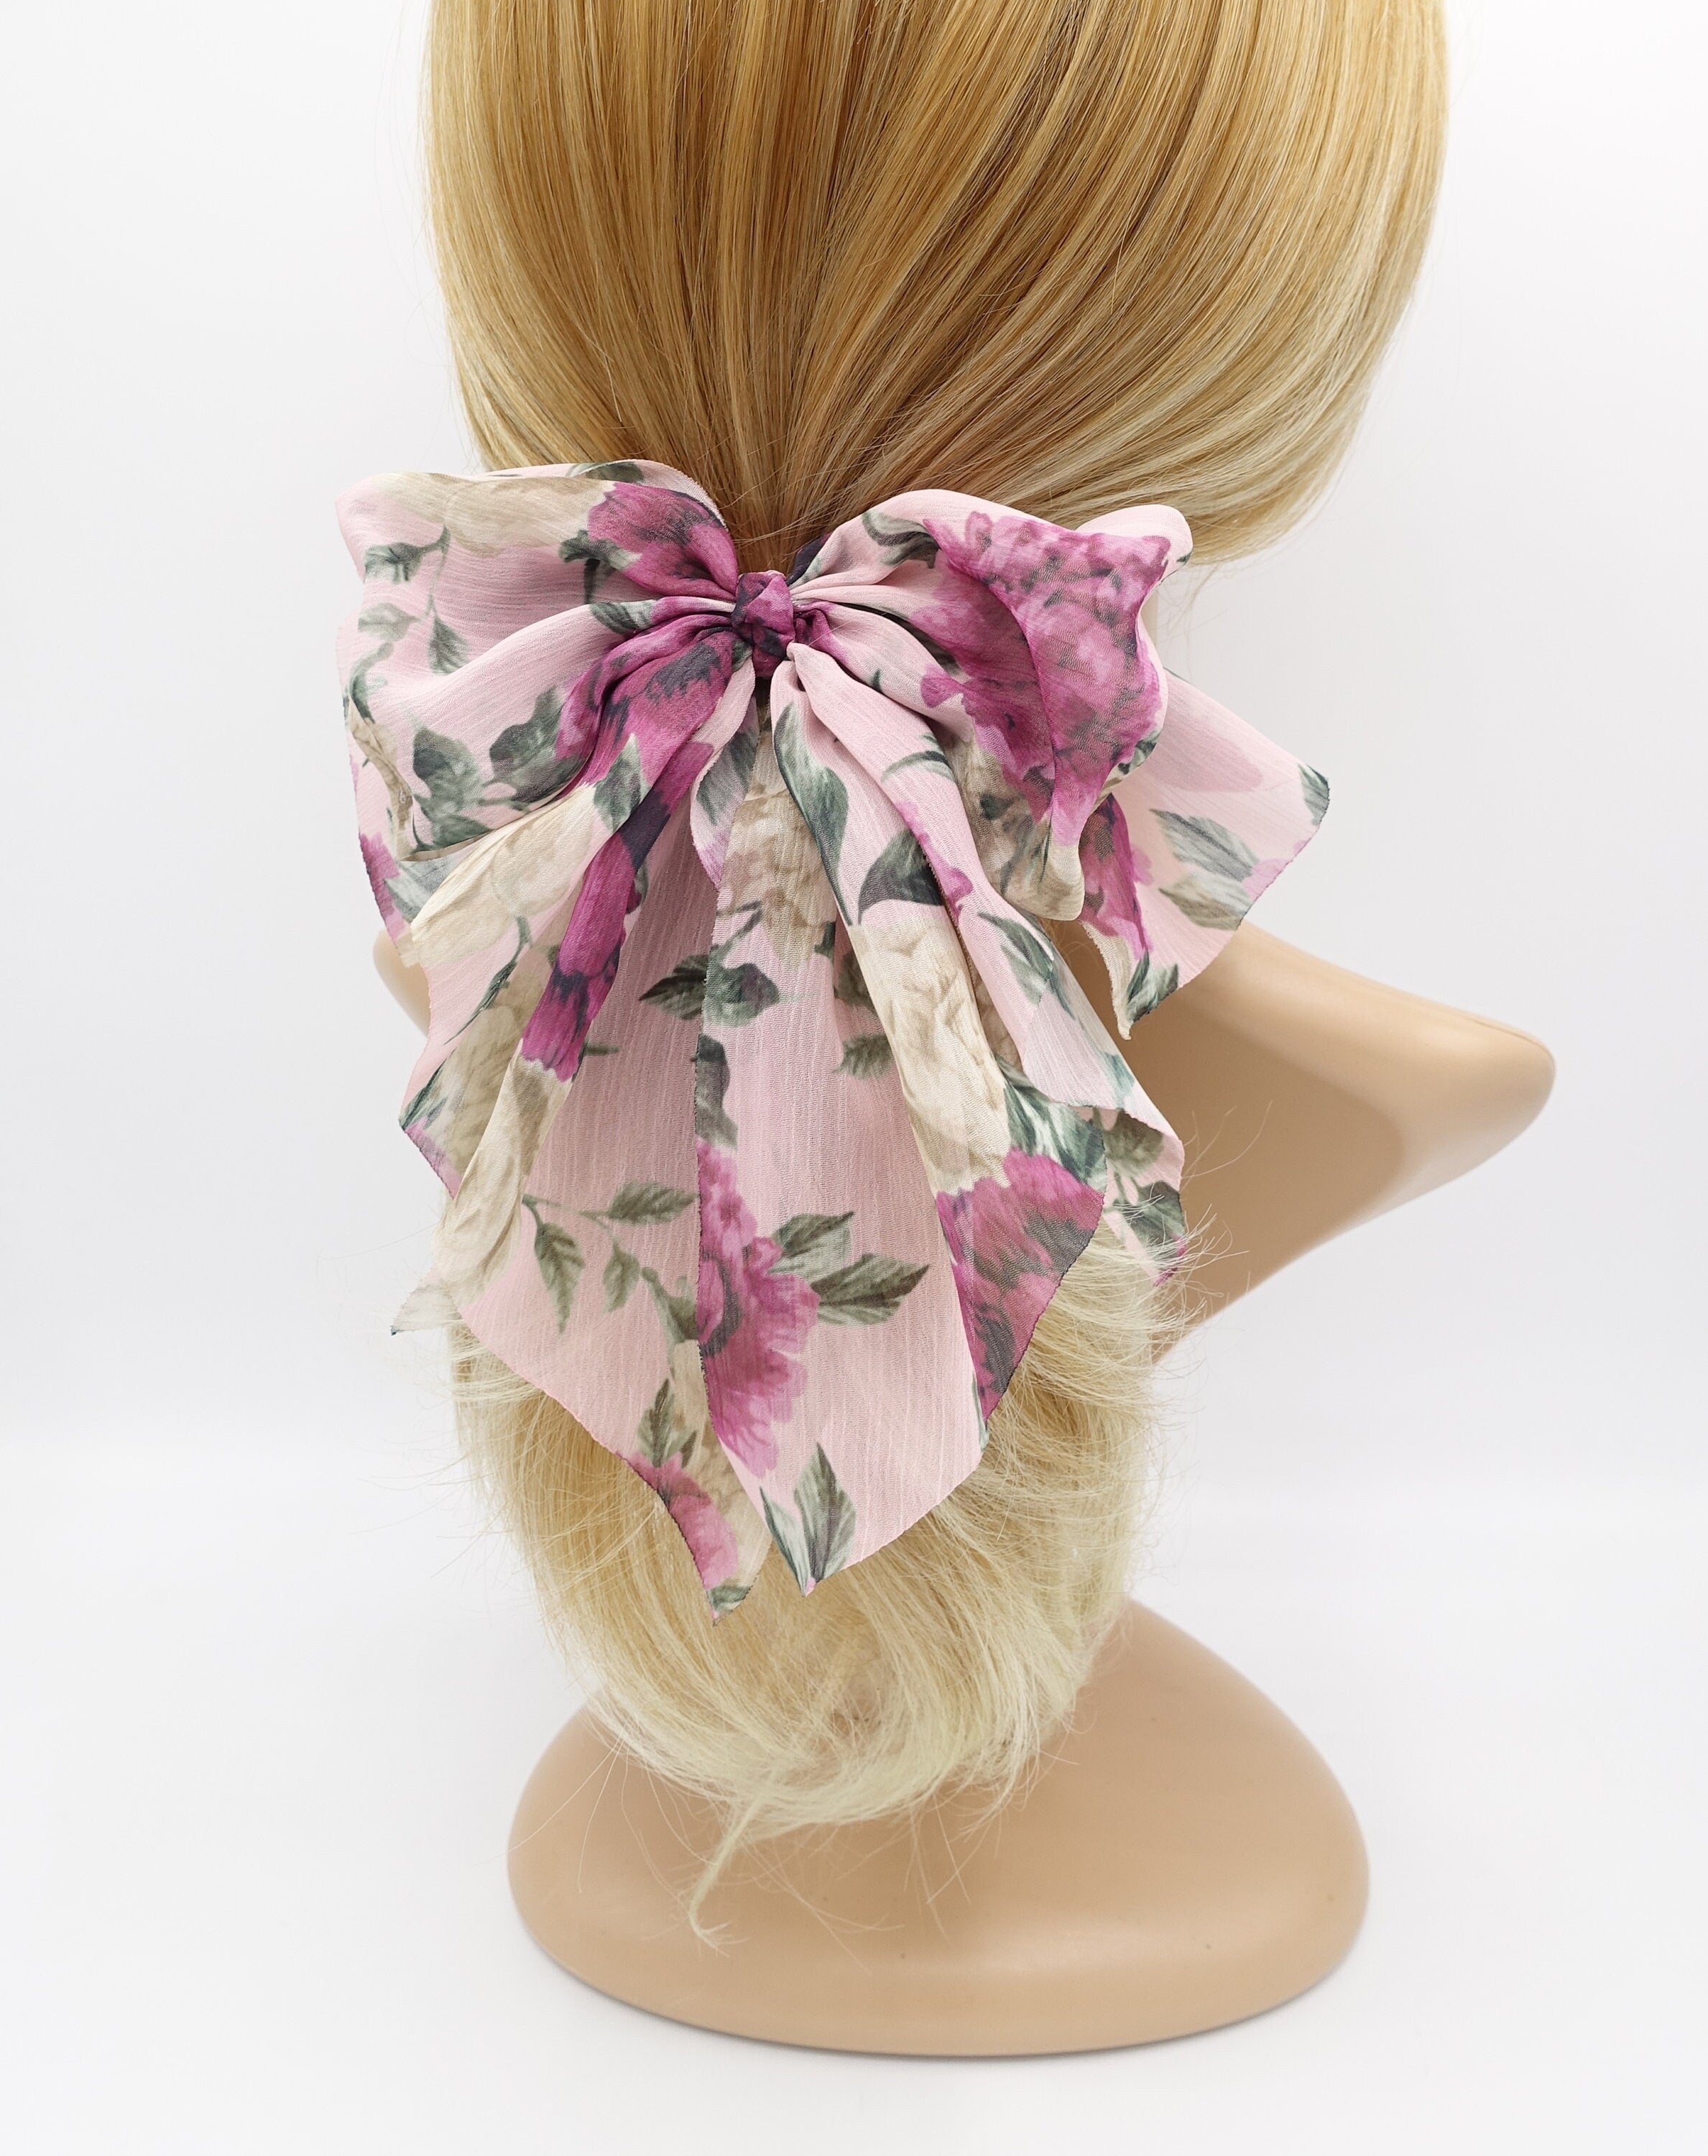 Feminine Hair Accessories Collection: Headbands & Hair Bows